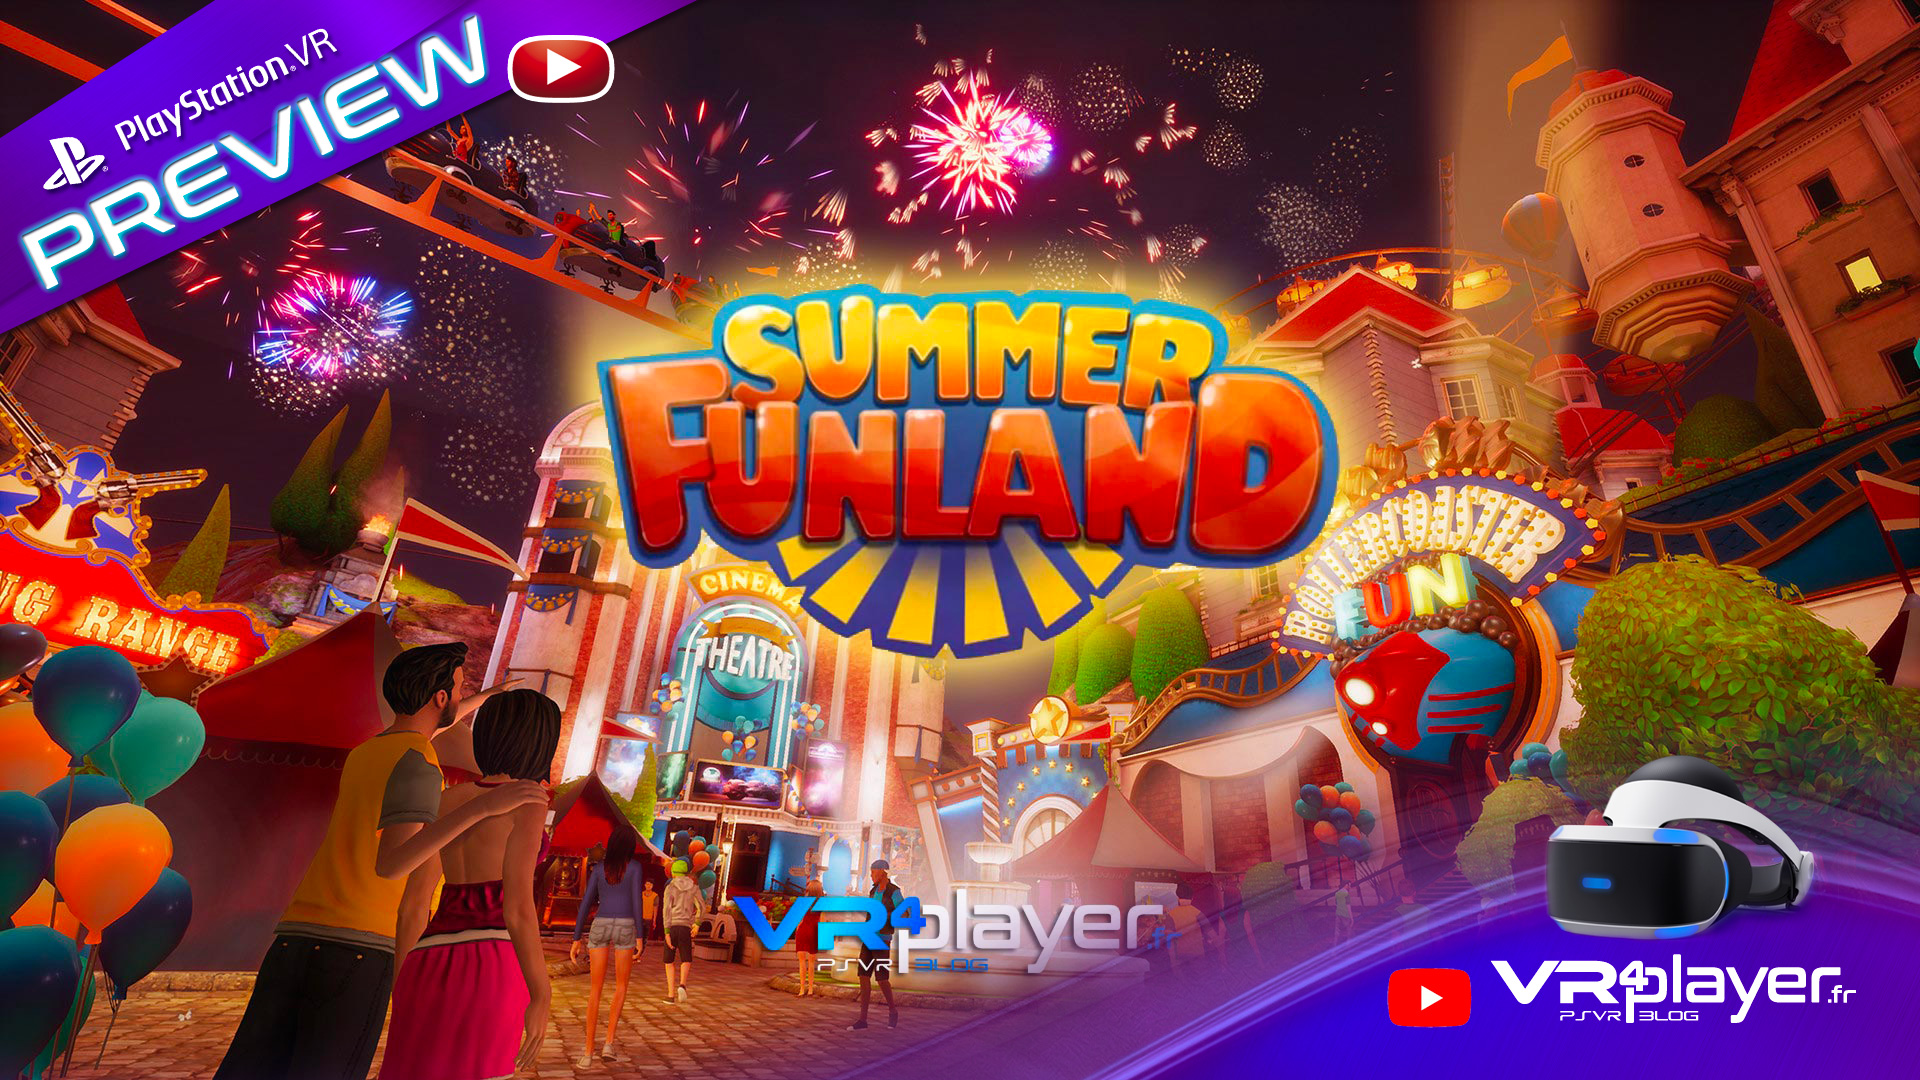 Vacation vr. Игра Summer Funland. Summer Funland VR ps4 диск. Превью ВР. Веселяндия / Funland.